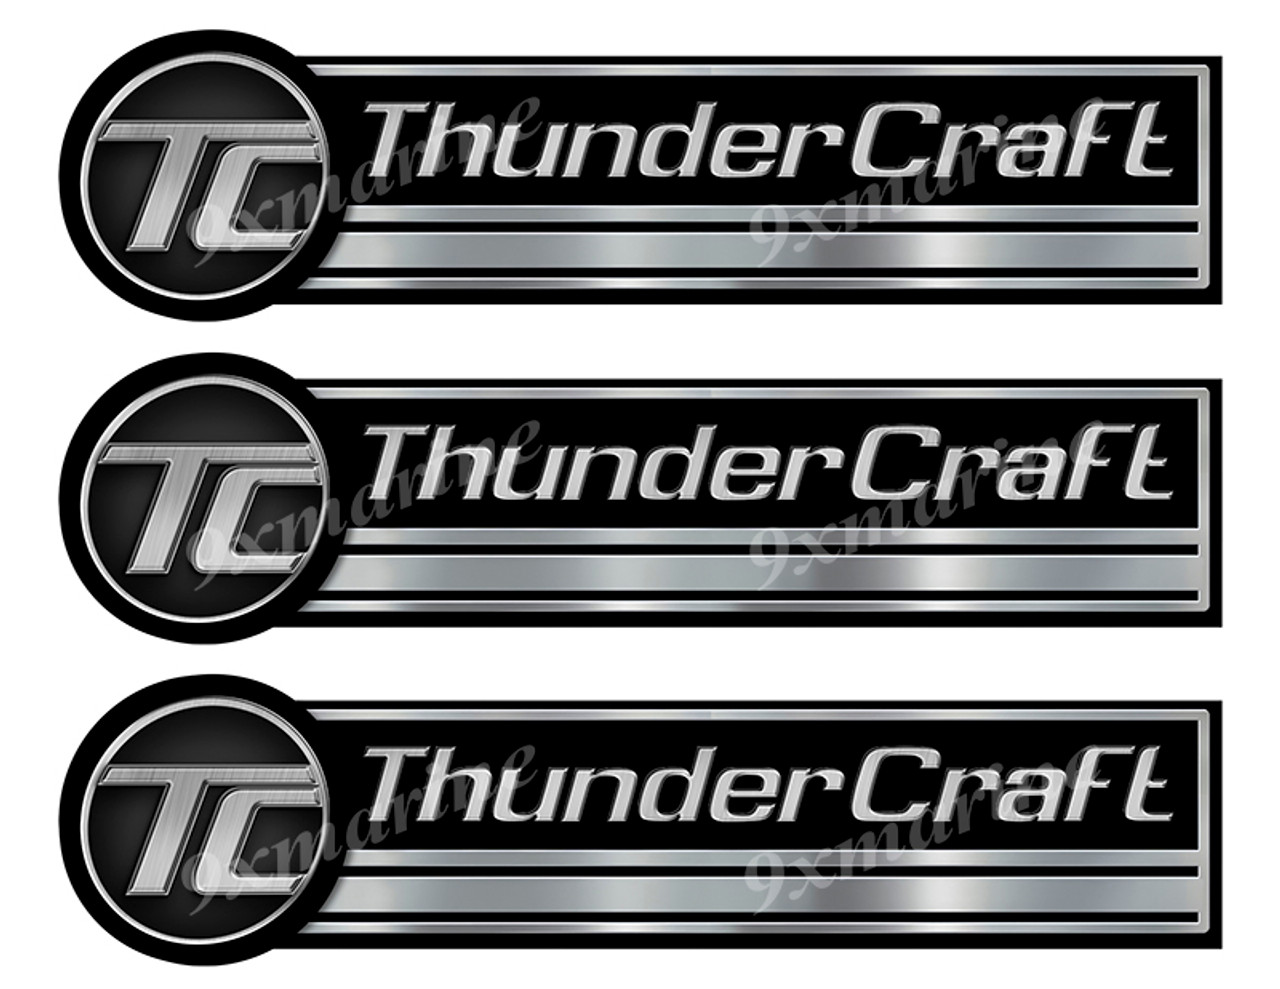 3 ThunderCraft Classic Stickers - 10" long each